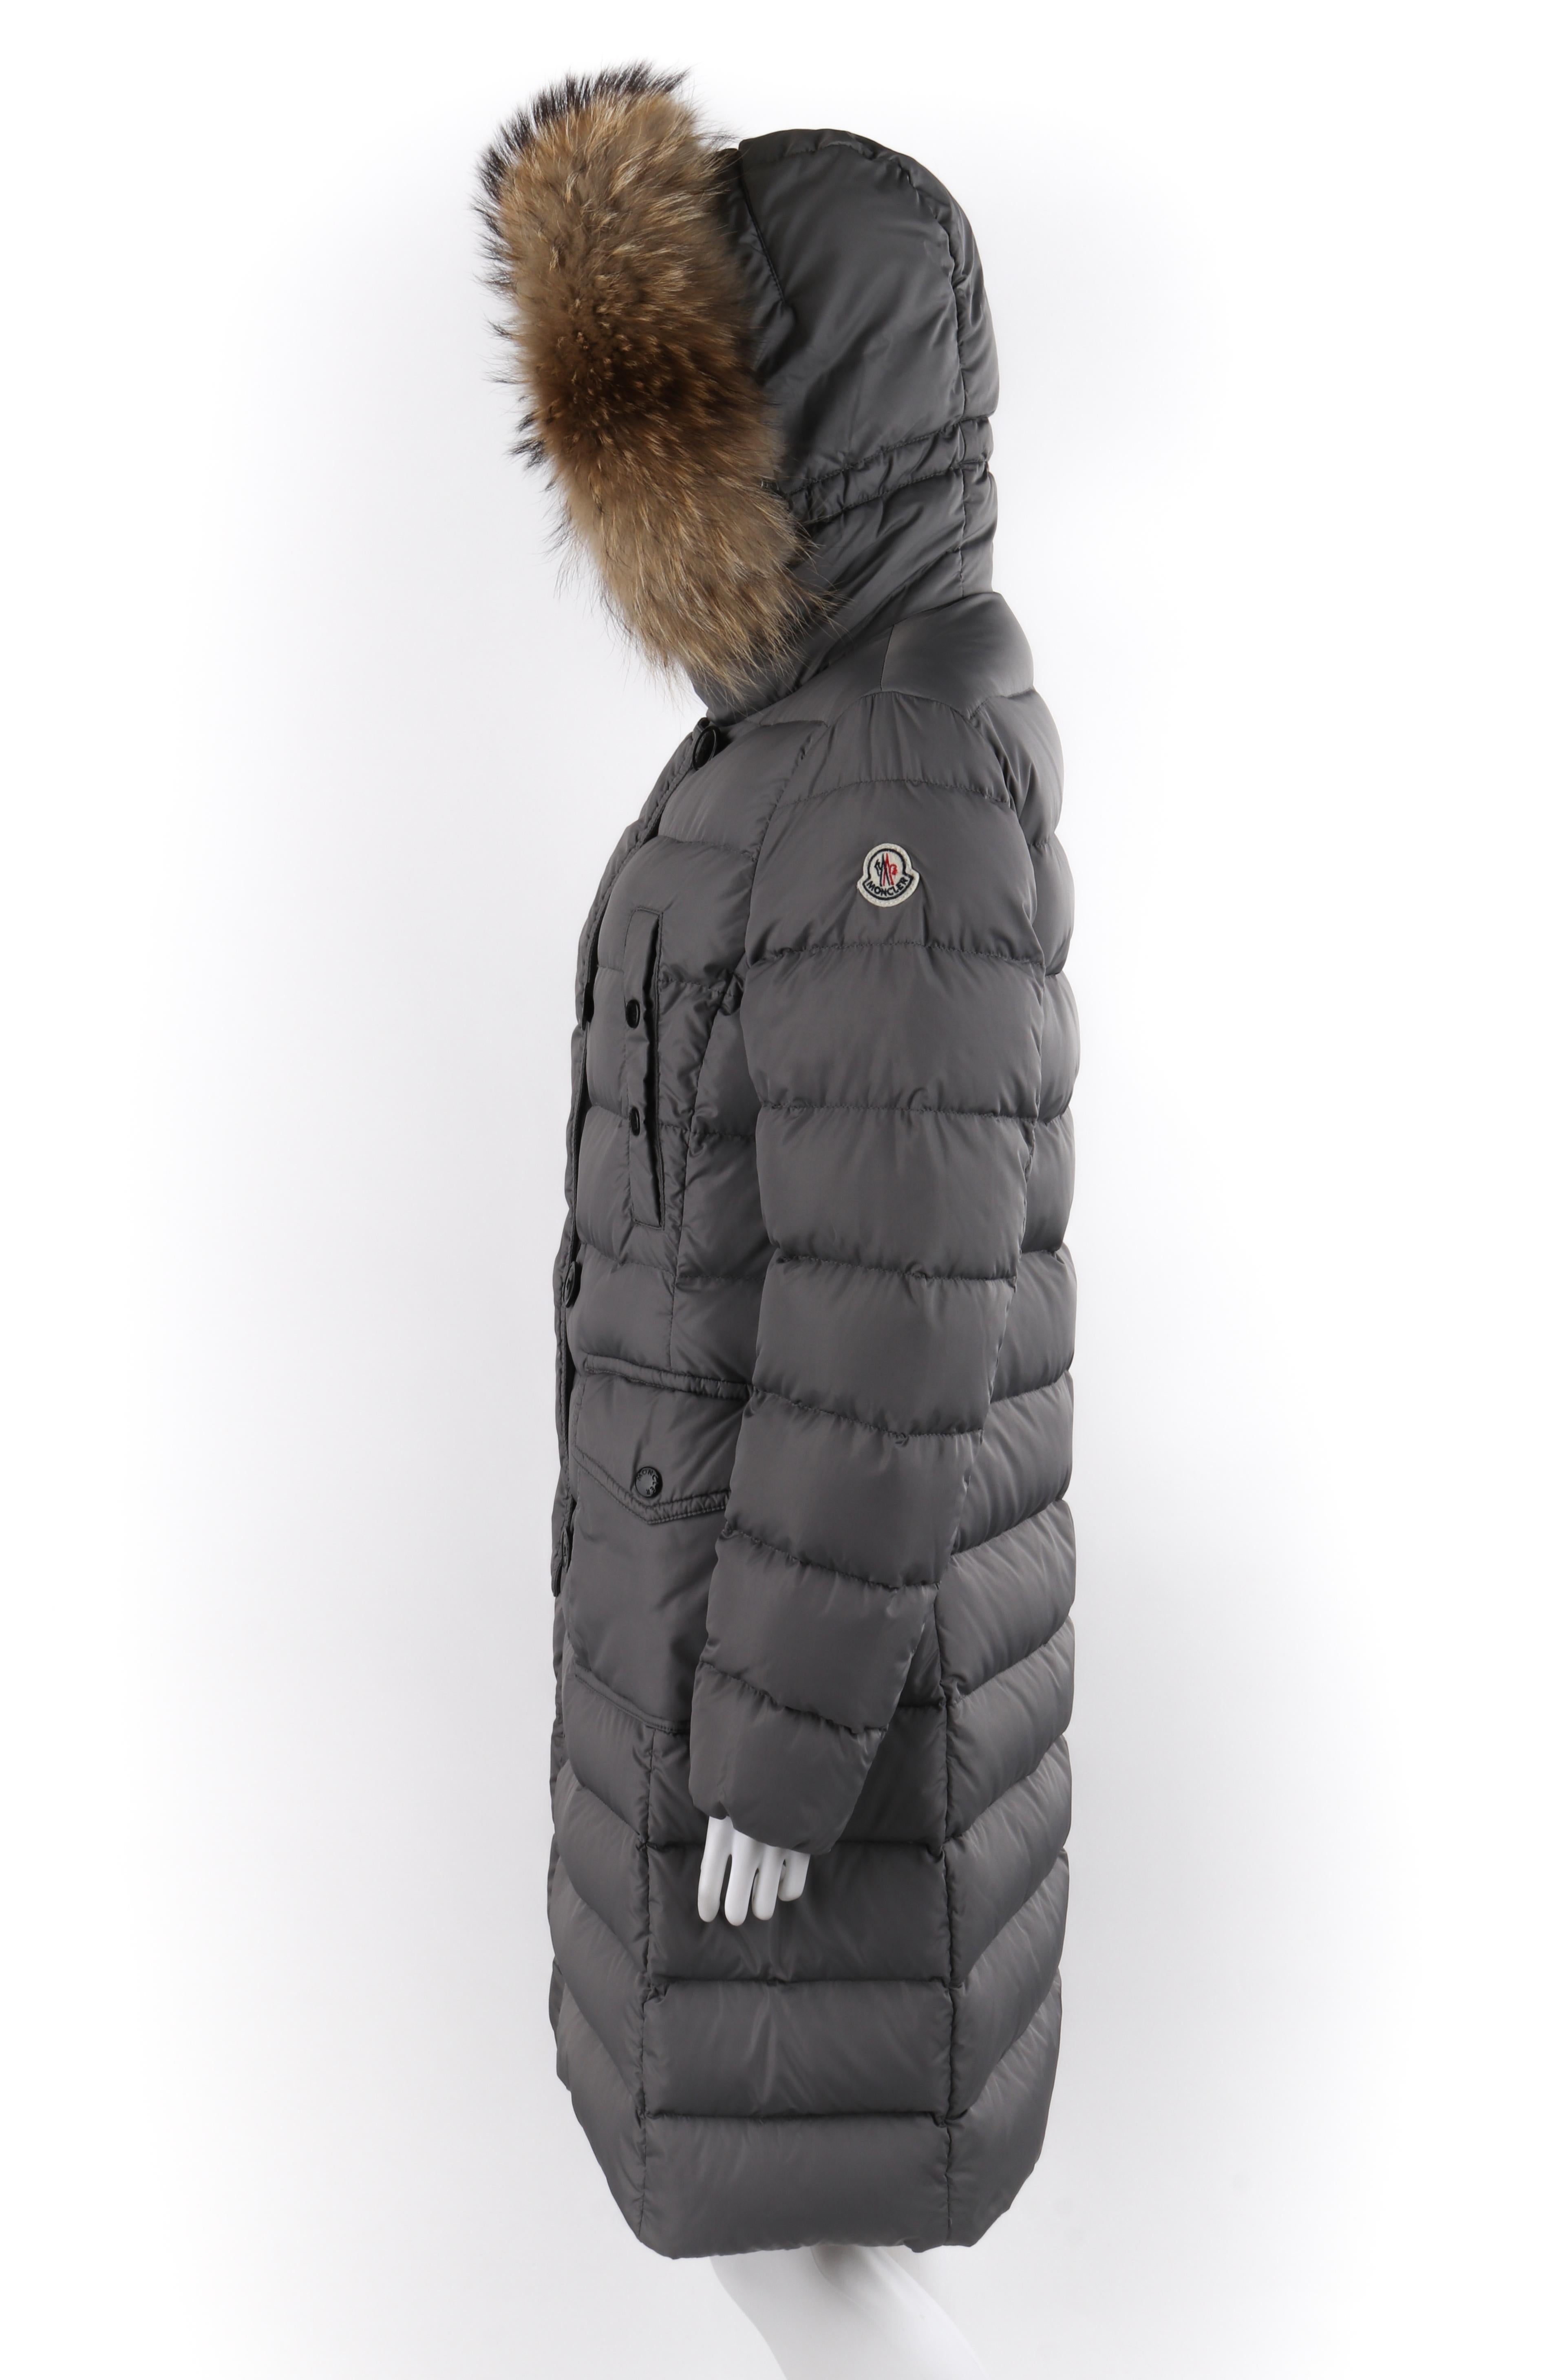 MONCLER “Genevrier” Giubbotto Gray Fur Quilted Puffer Jacket Parka Coat ...